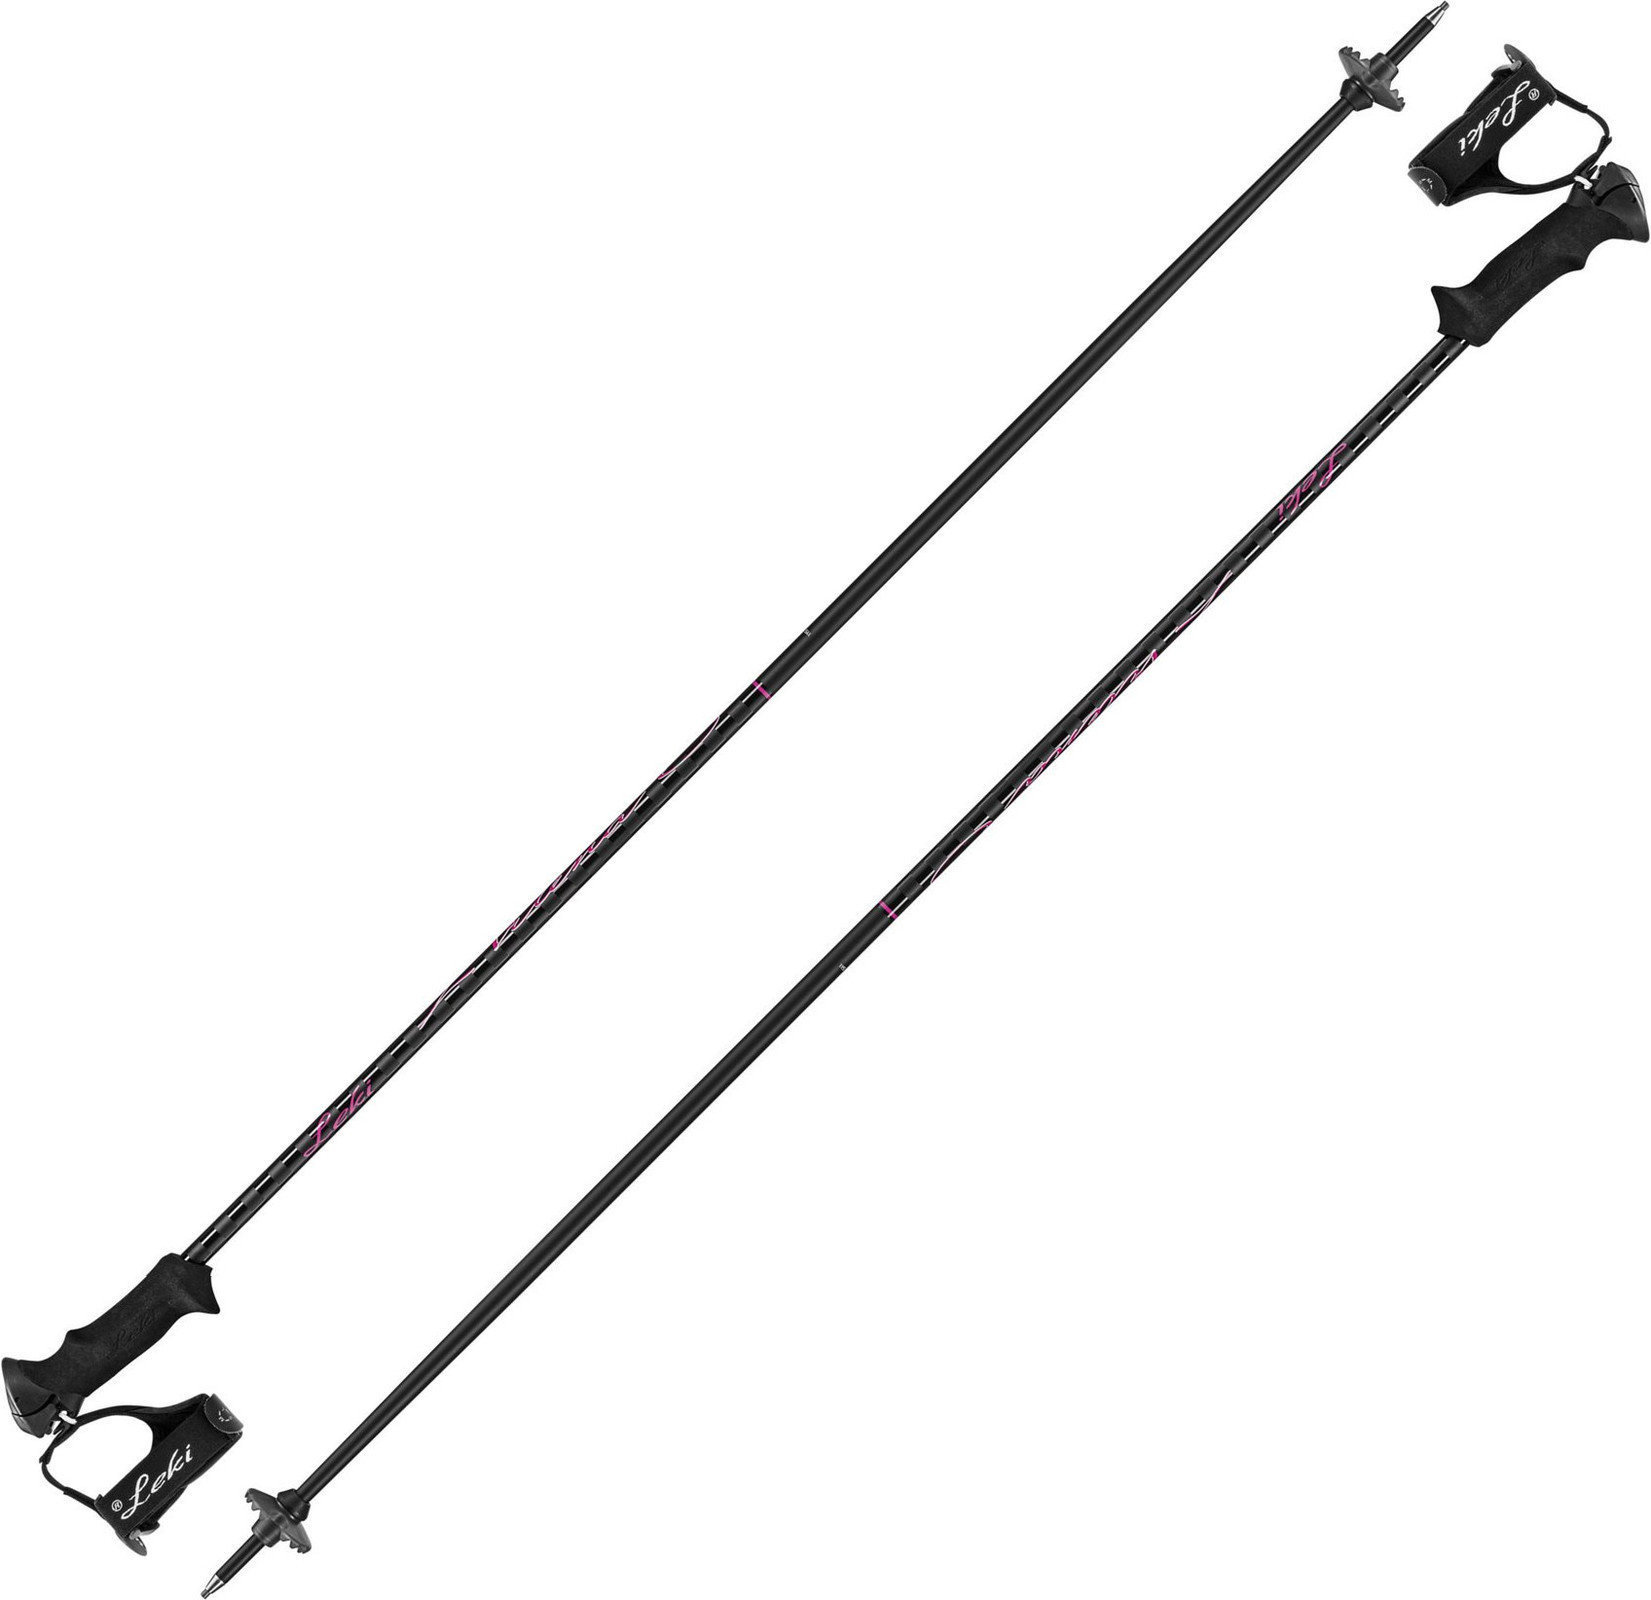 Ski Poles Leki Artena S Black/Berry 115 cm Ski Poles